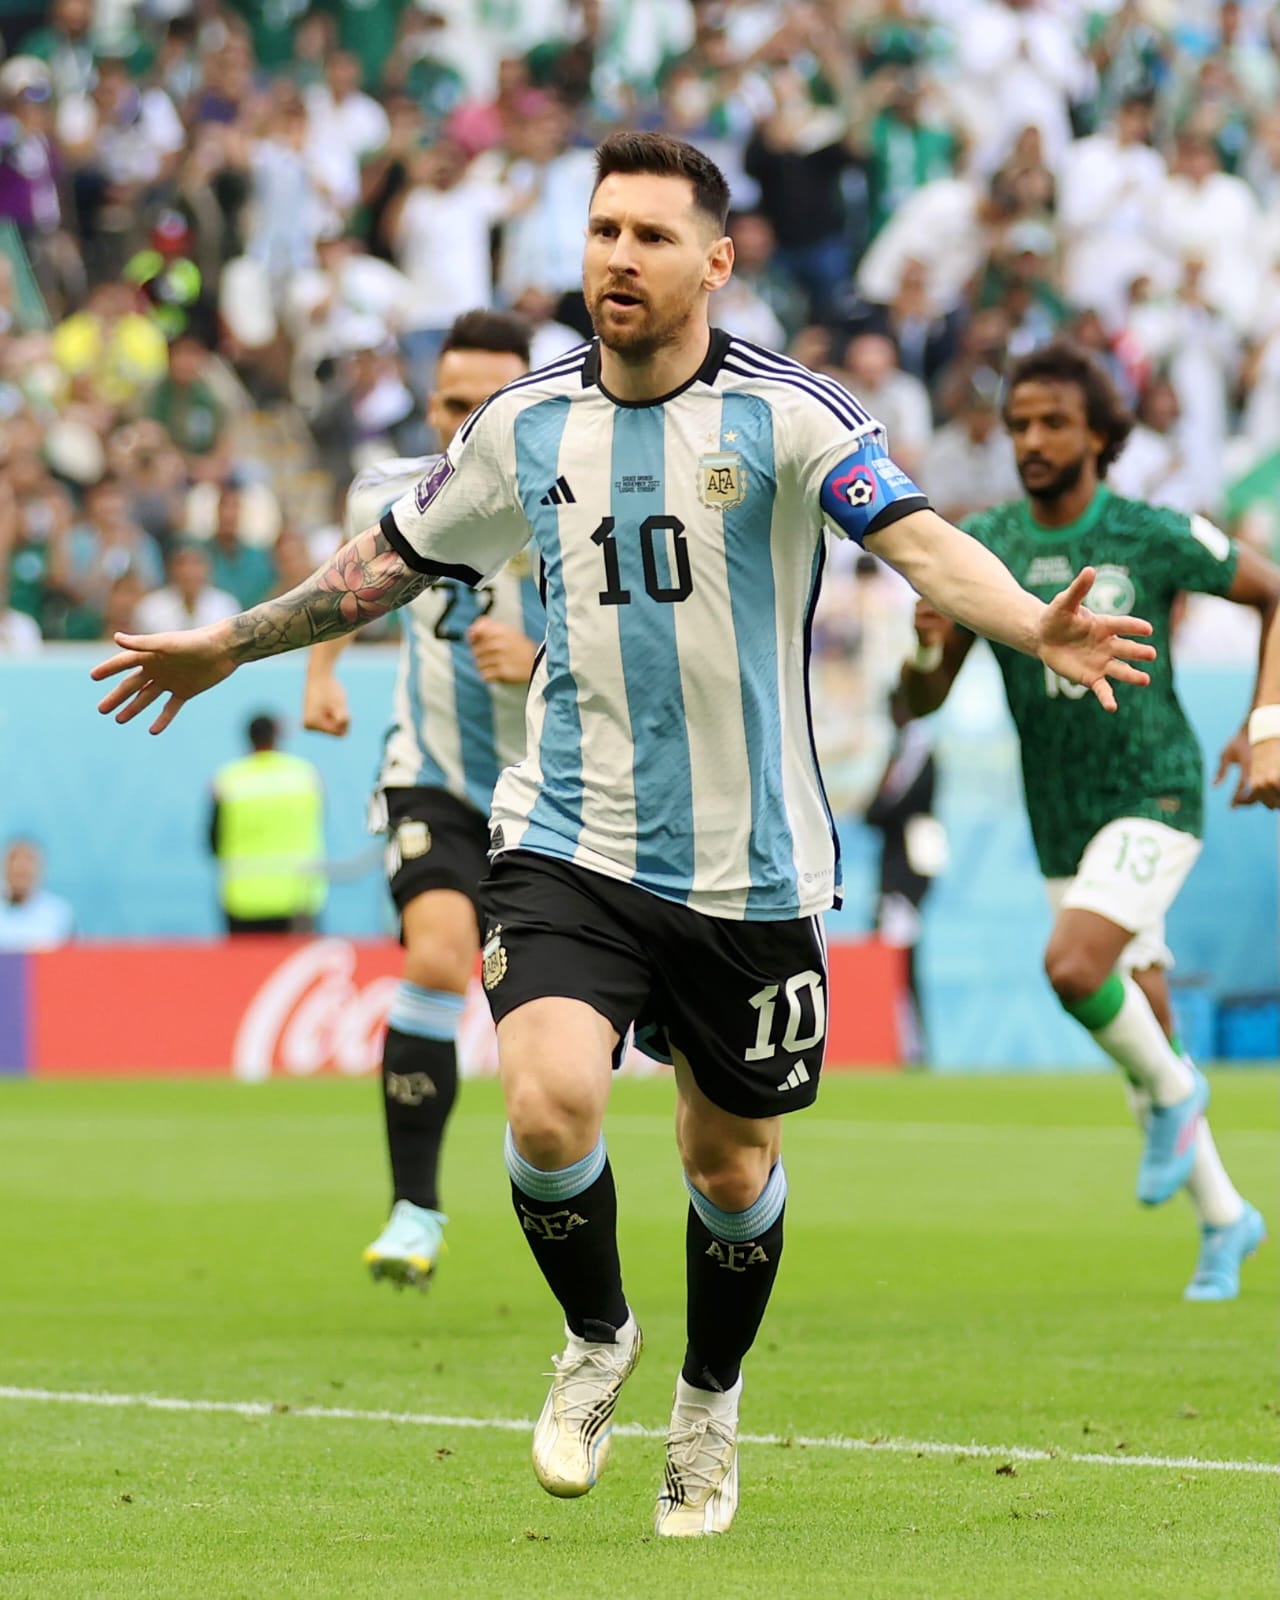  Ditumbangkan Arab Saudi, Berikut 5 Fakta Menarik Laga Argentina vs Arab Saudi Semalam